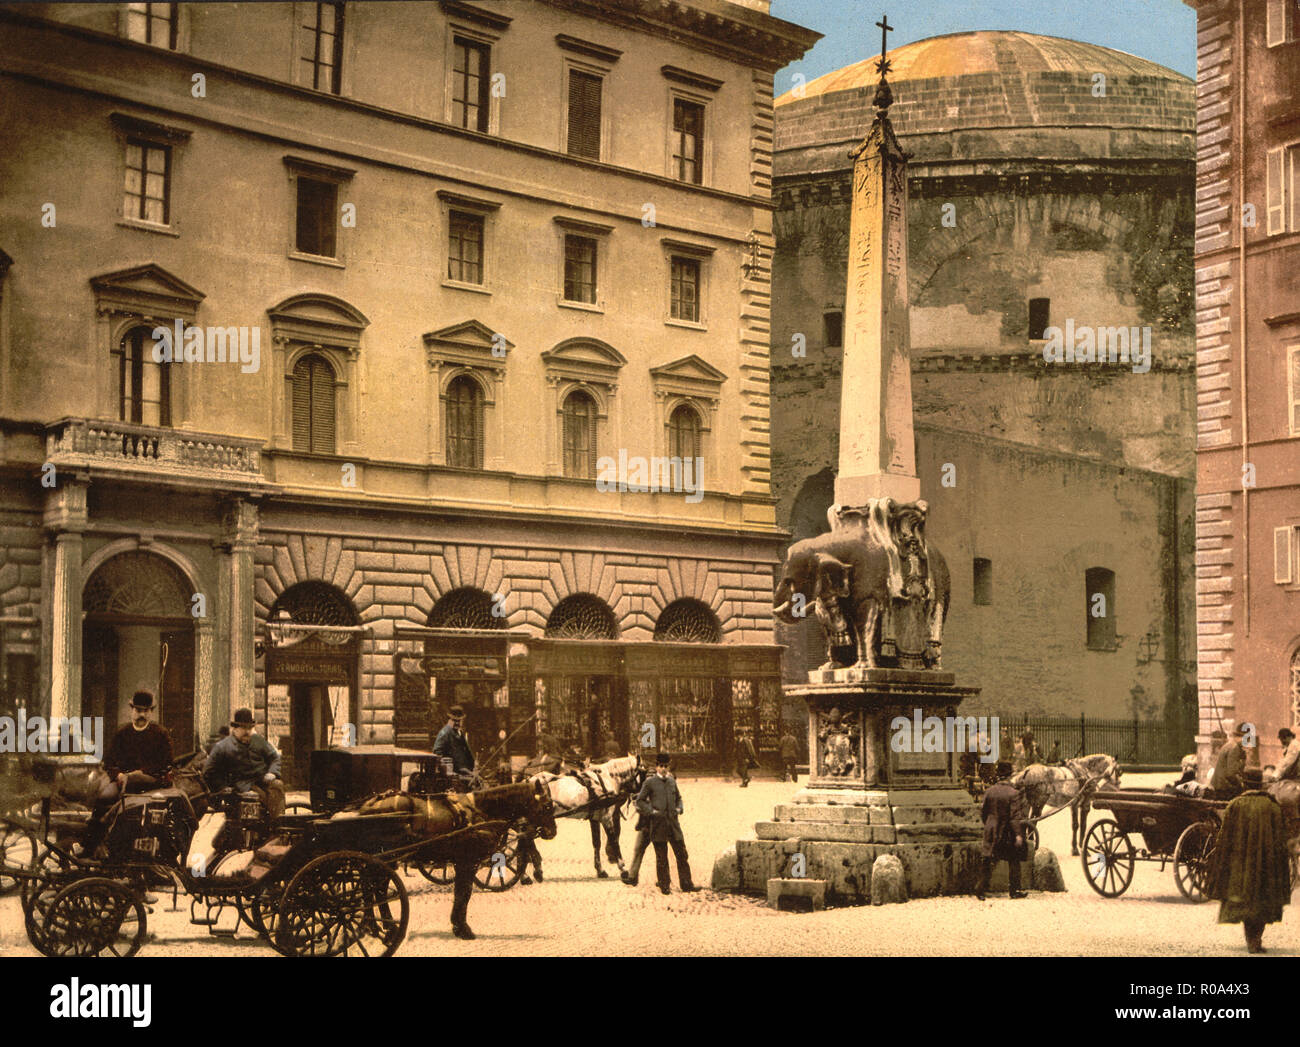 Piazza della Minerva, Rome, Italie, impression Photochrome, Detroit Publishing Company, 1900 Banque D'Images